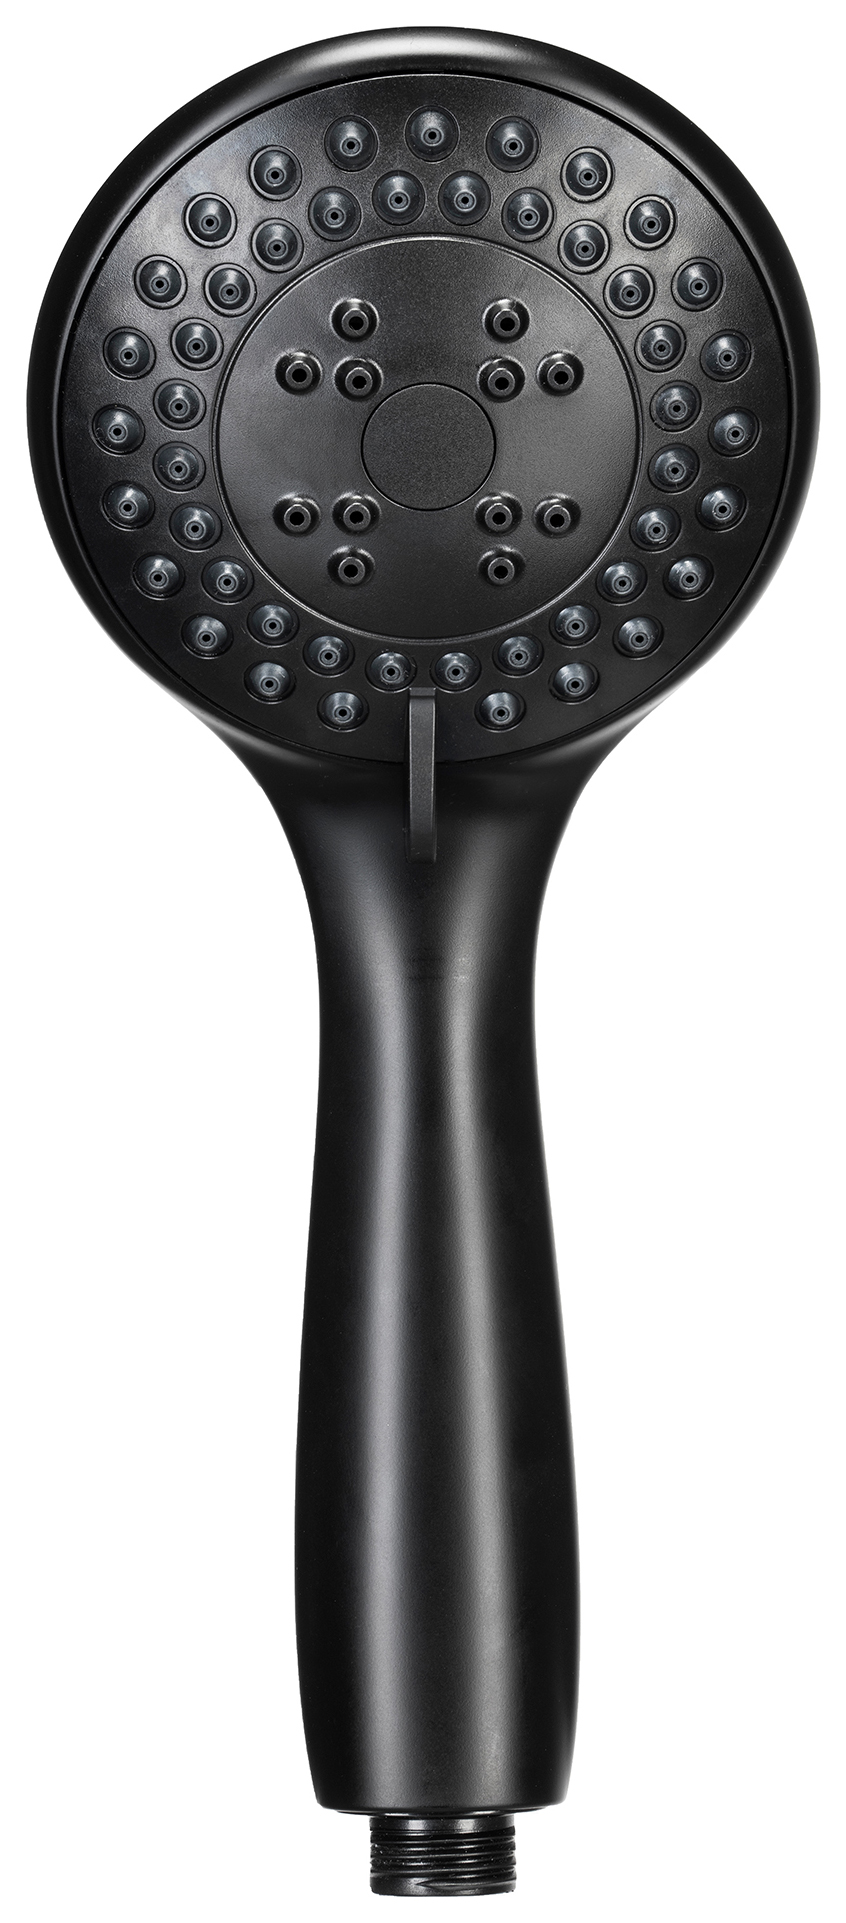 Image of Croydex Nero 3 Function Shower Handset - Matt Black